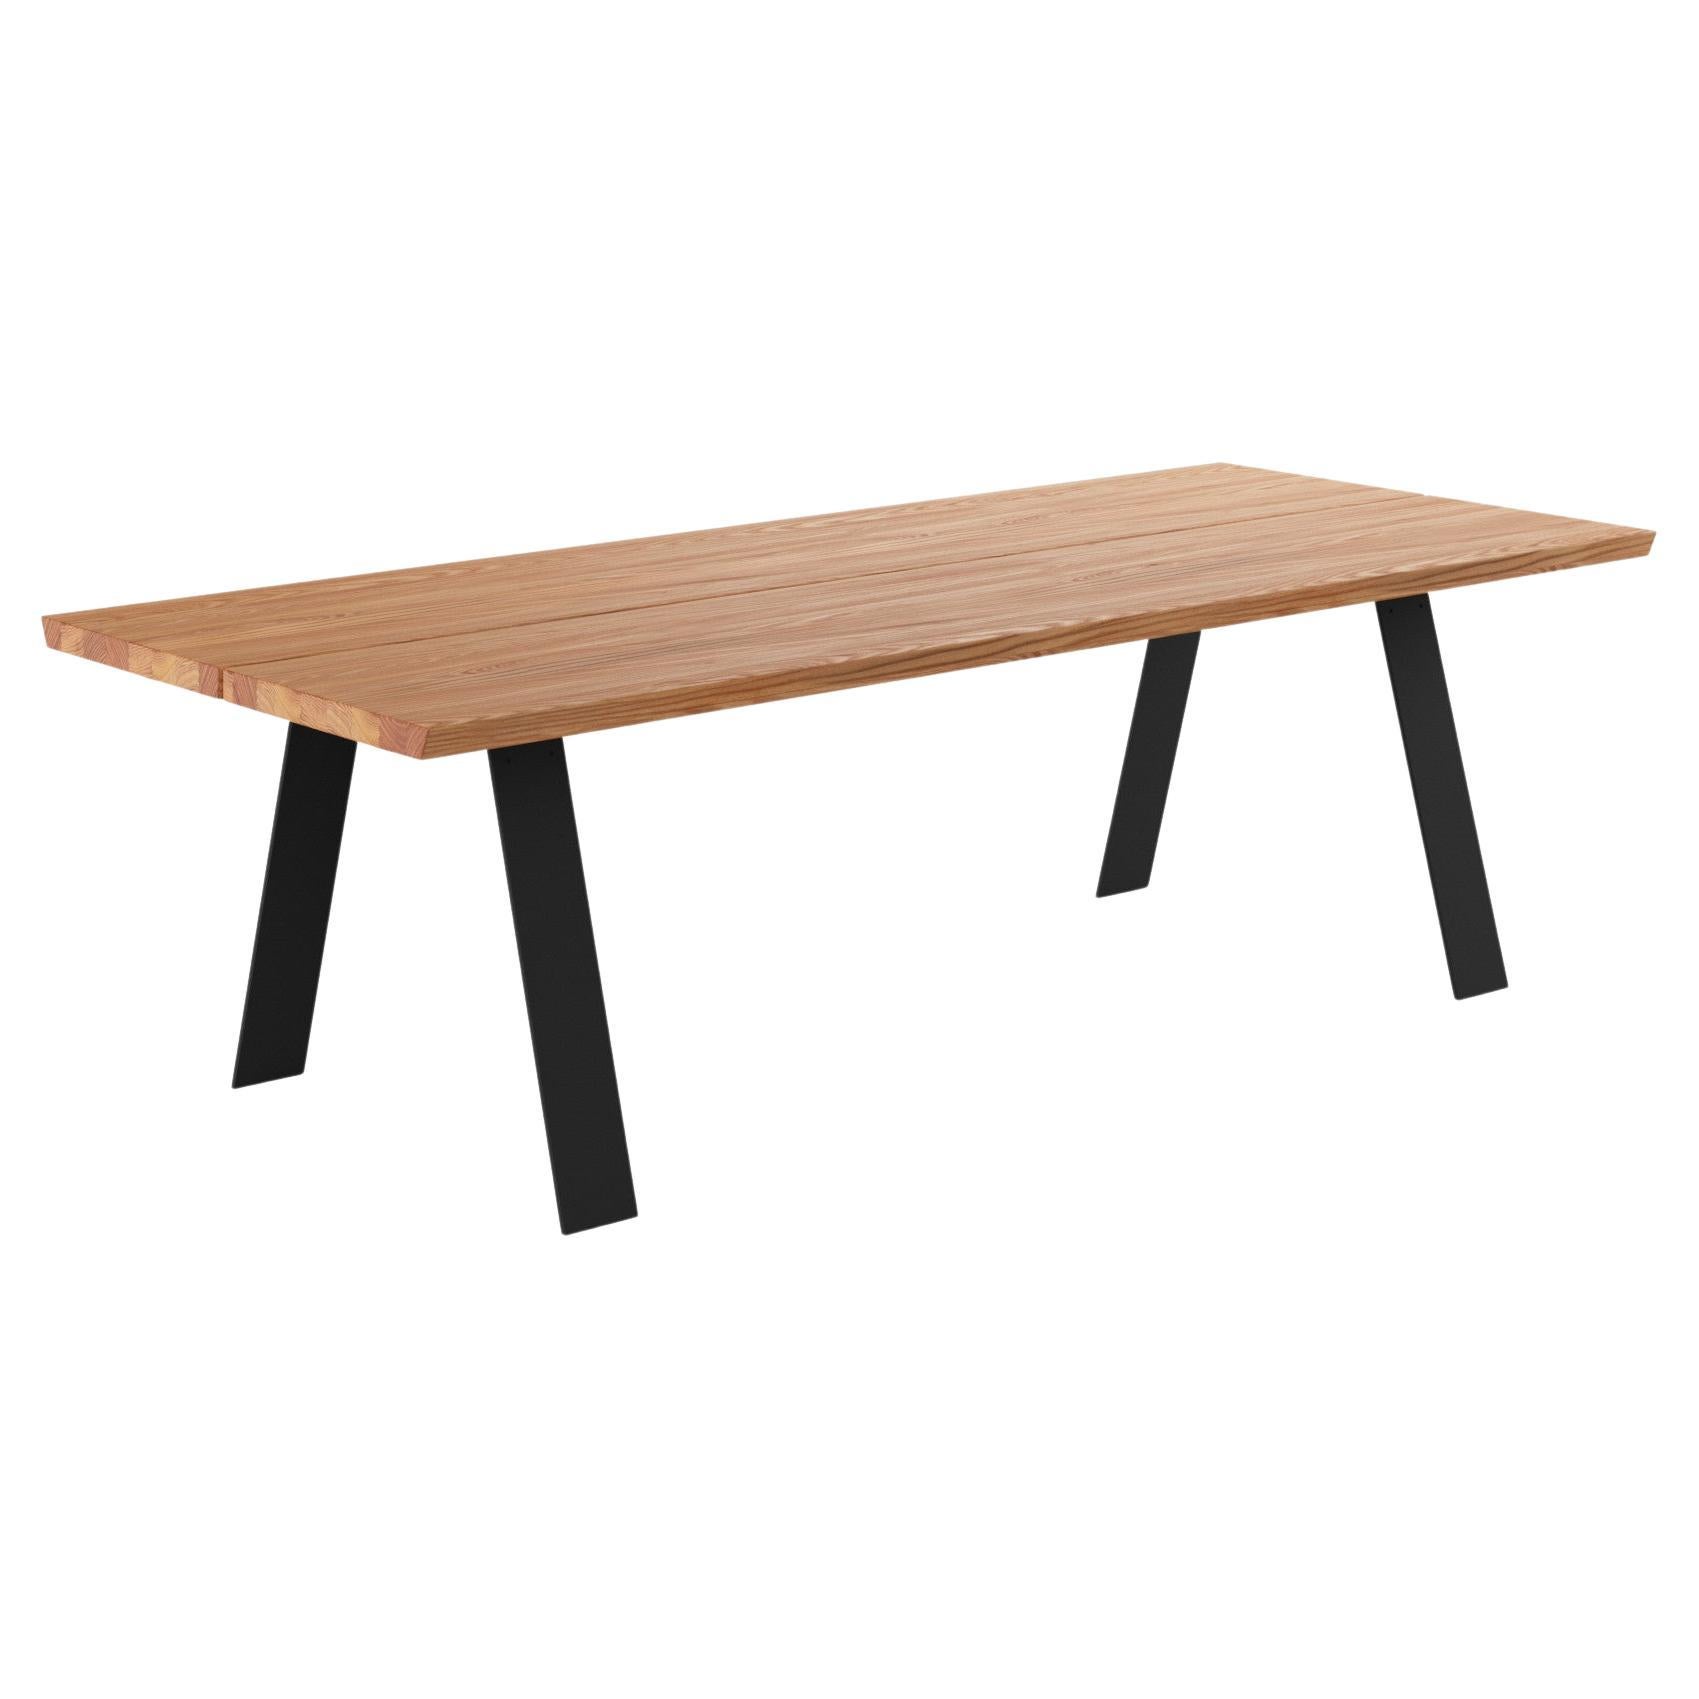 GM3200 Plank Table, Elm, Black steel legs - Design by Nissen & Gehl MDD For Sale